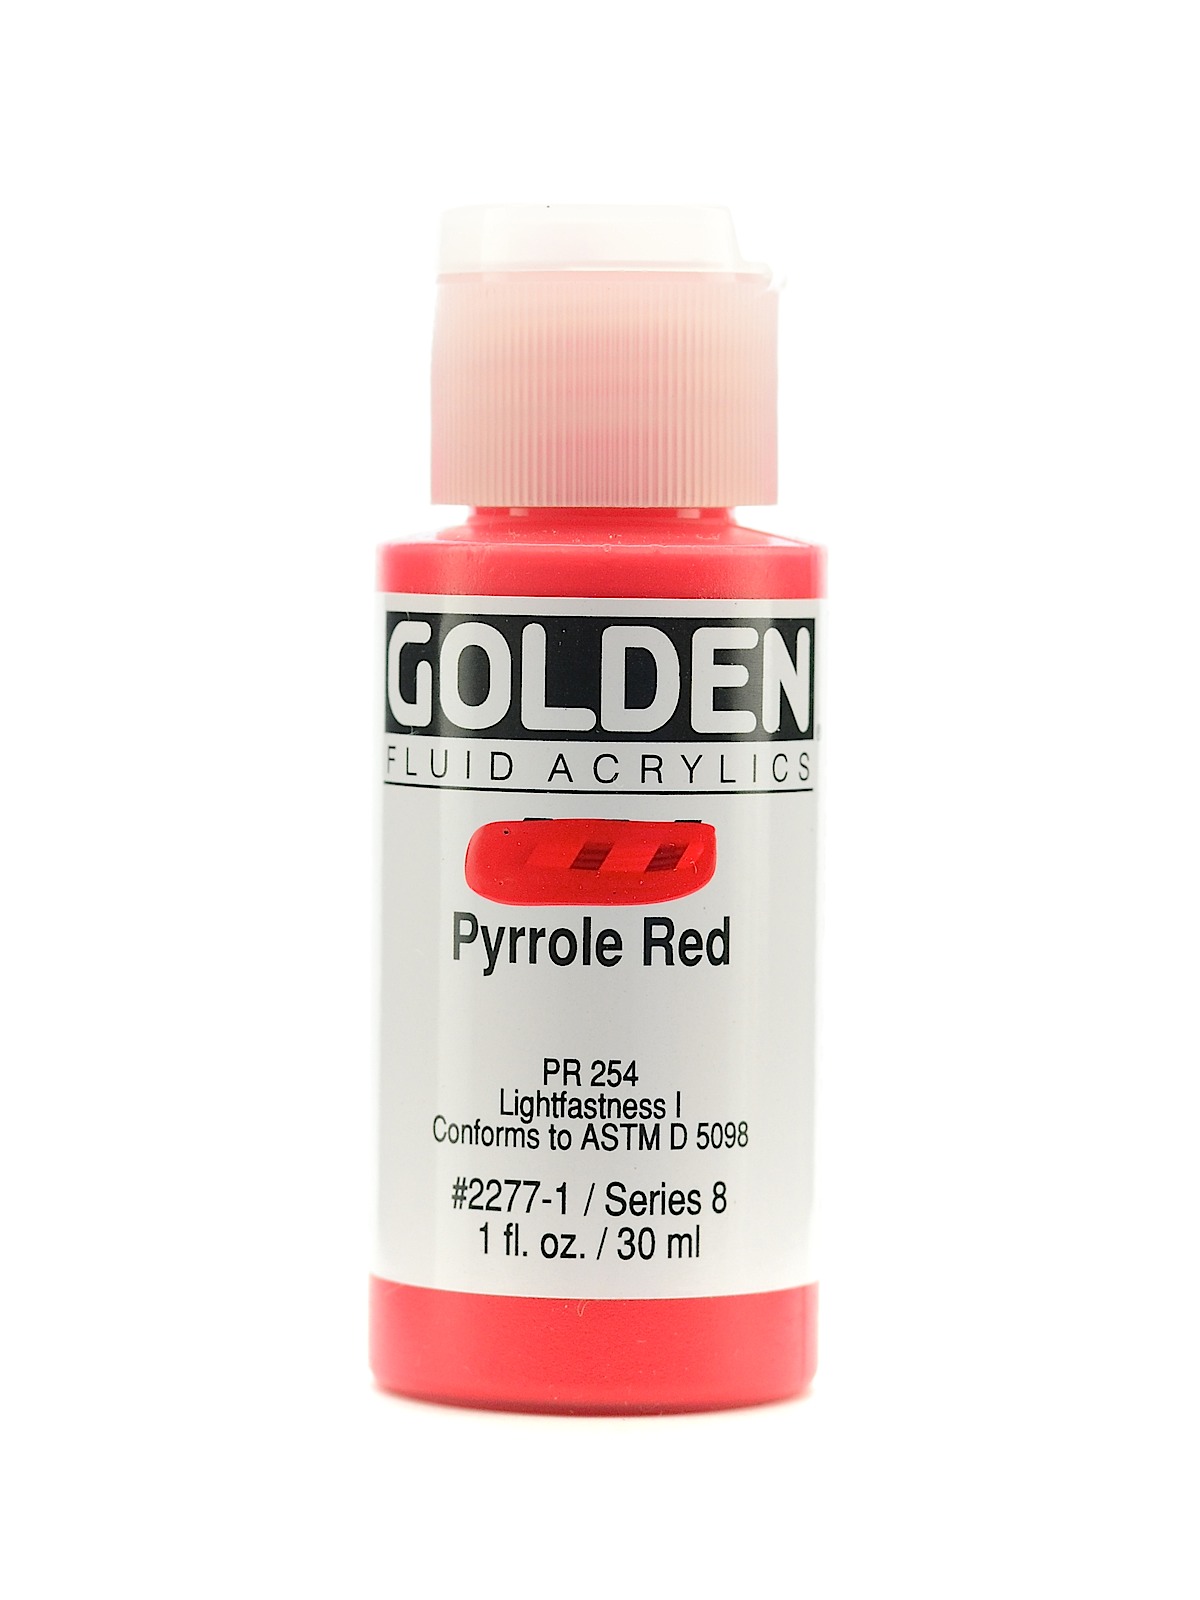 Fluid Acrylics pyrrole red 1 oz.